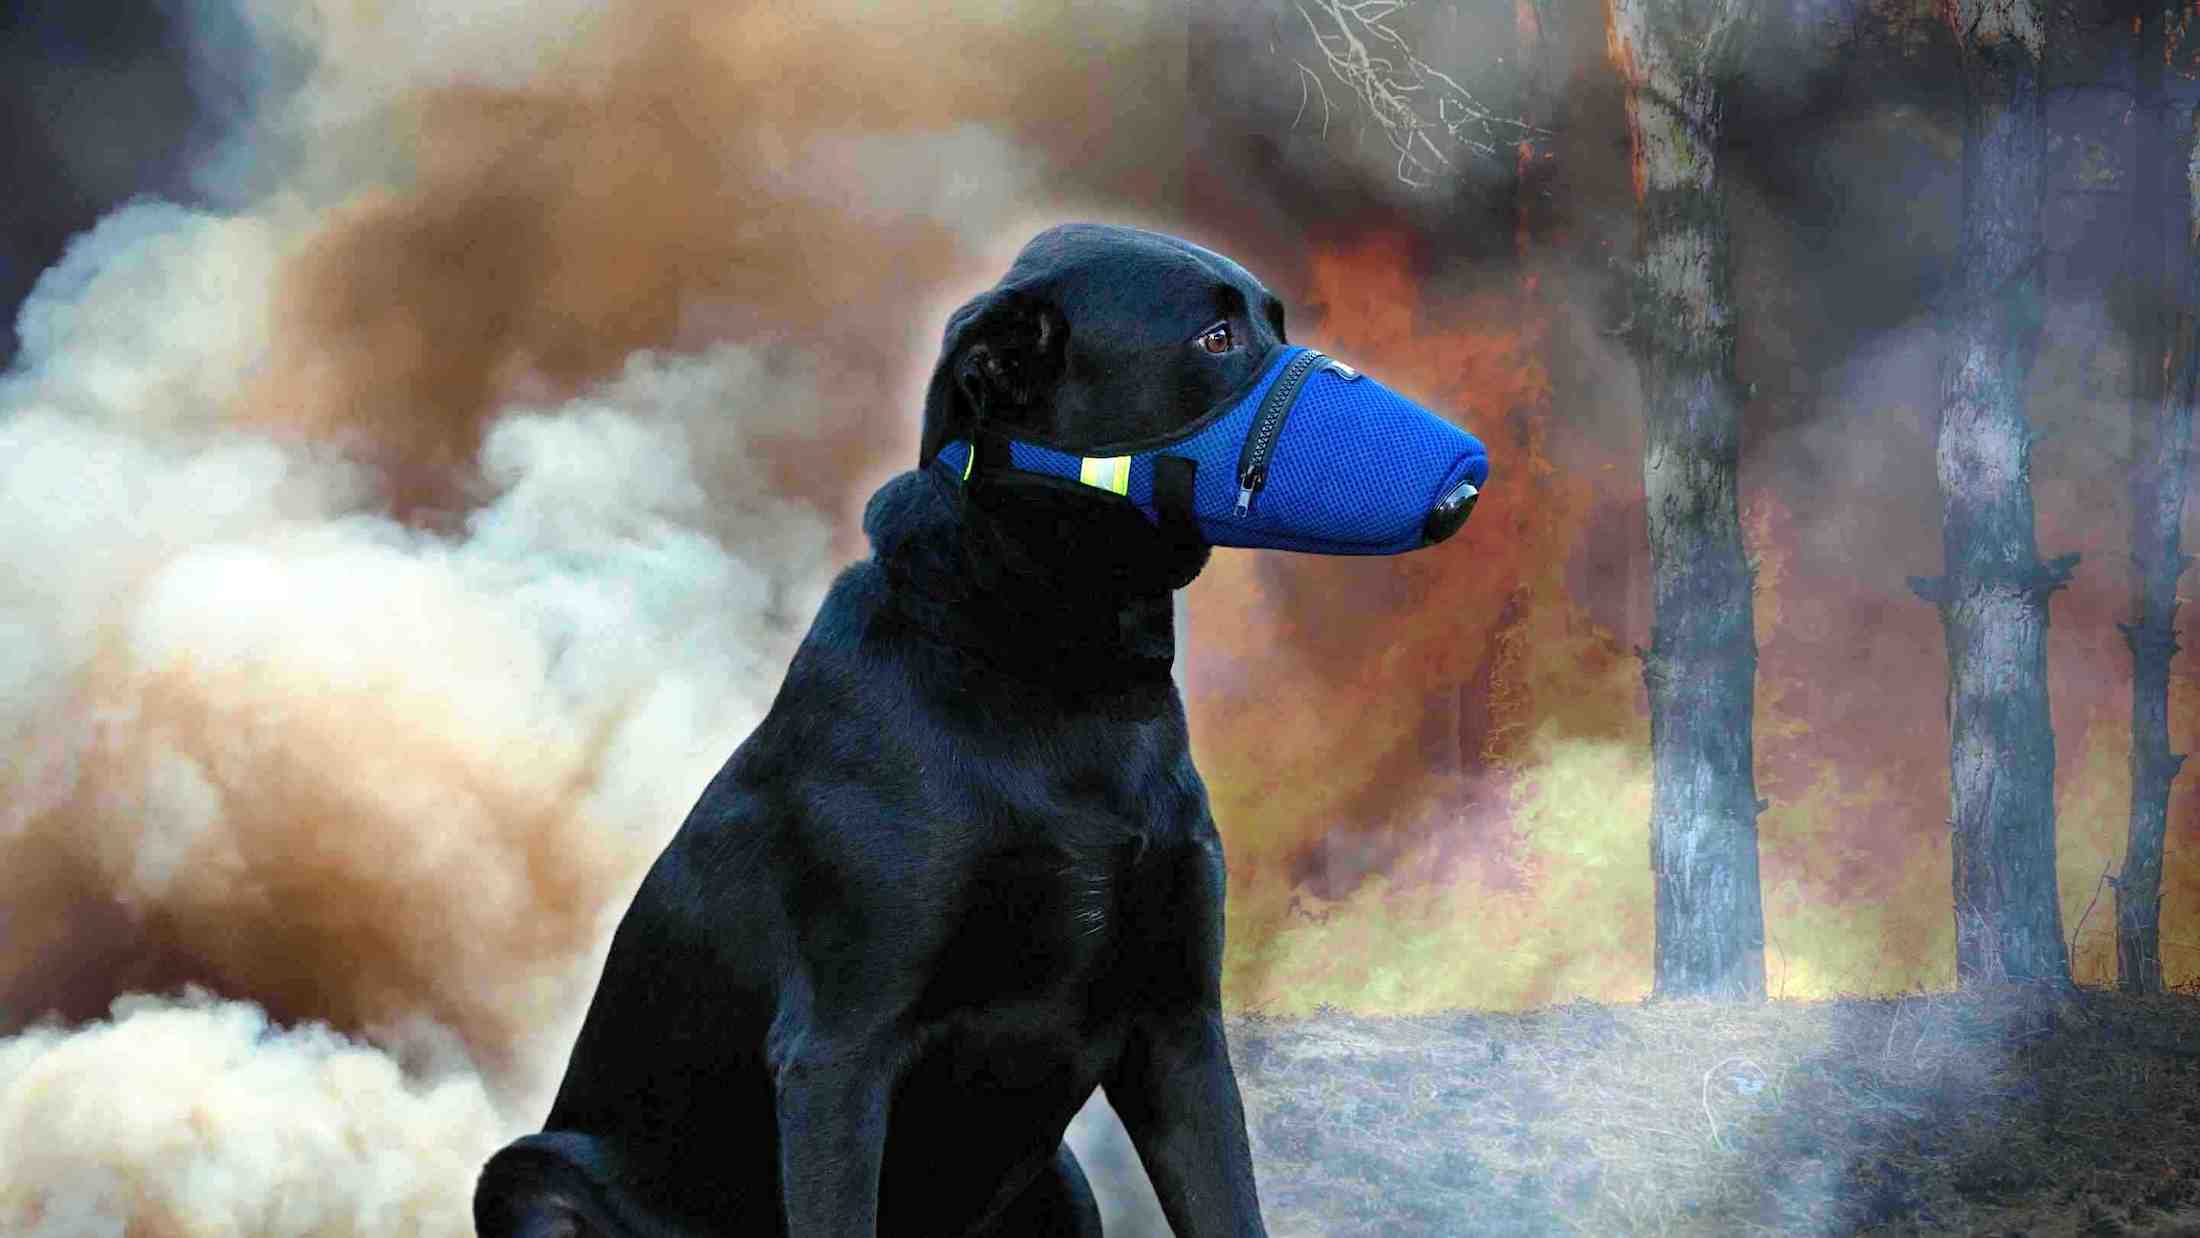 K9 Mask® Dog Filter Air Mask προσώπου για σκύλους για καπνό, σκόνη, στάχτη, γύρη, δακρυγόνα, κόκκινη παλίρροια, χημικά, δακρυγόνα, βακτήρια, αλλεργιογόνα